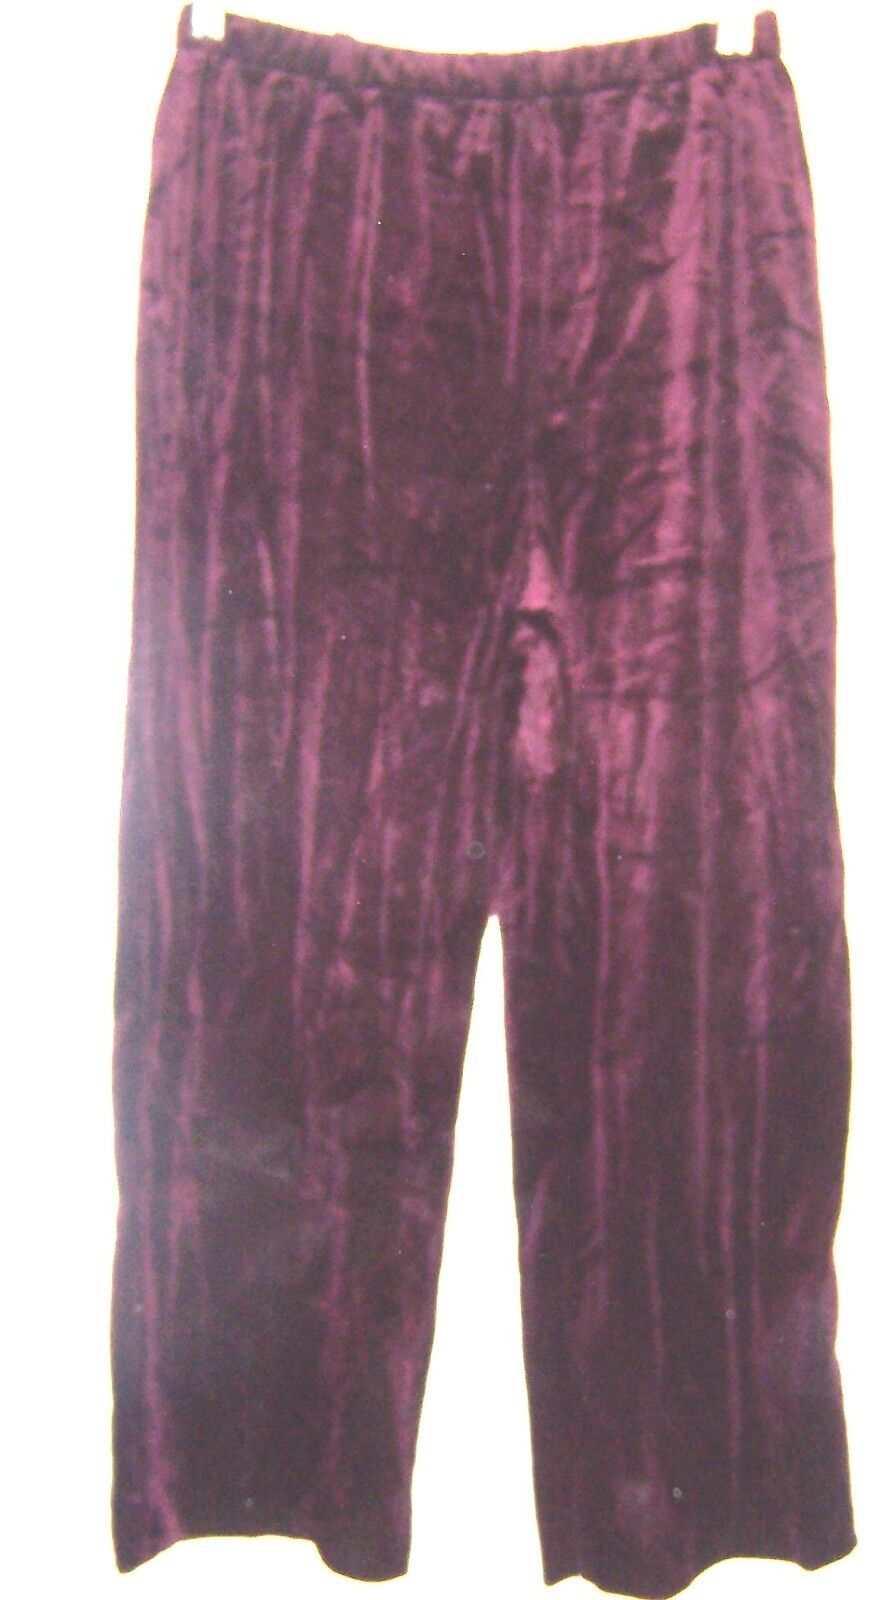 Sz S/M - Red Violet Velvet Pants w/Belt Loops 